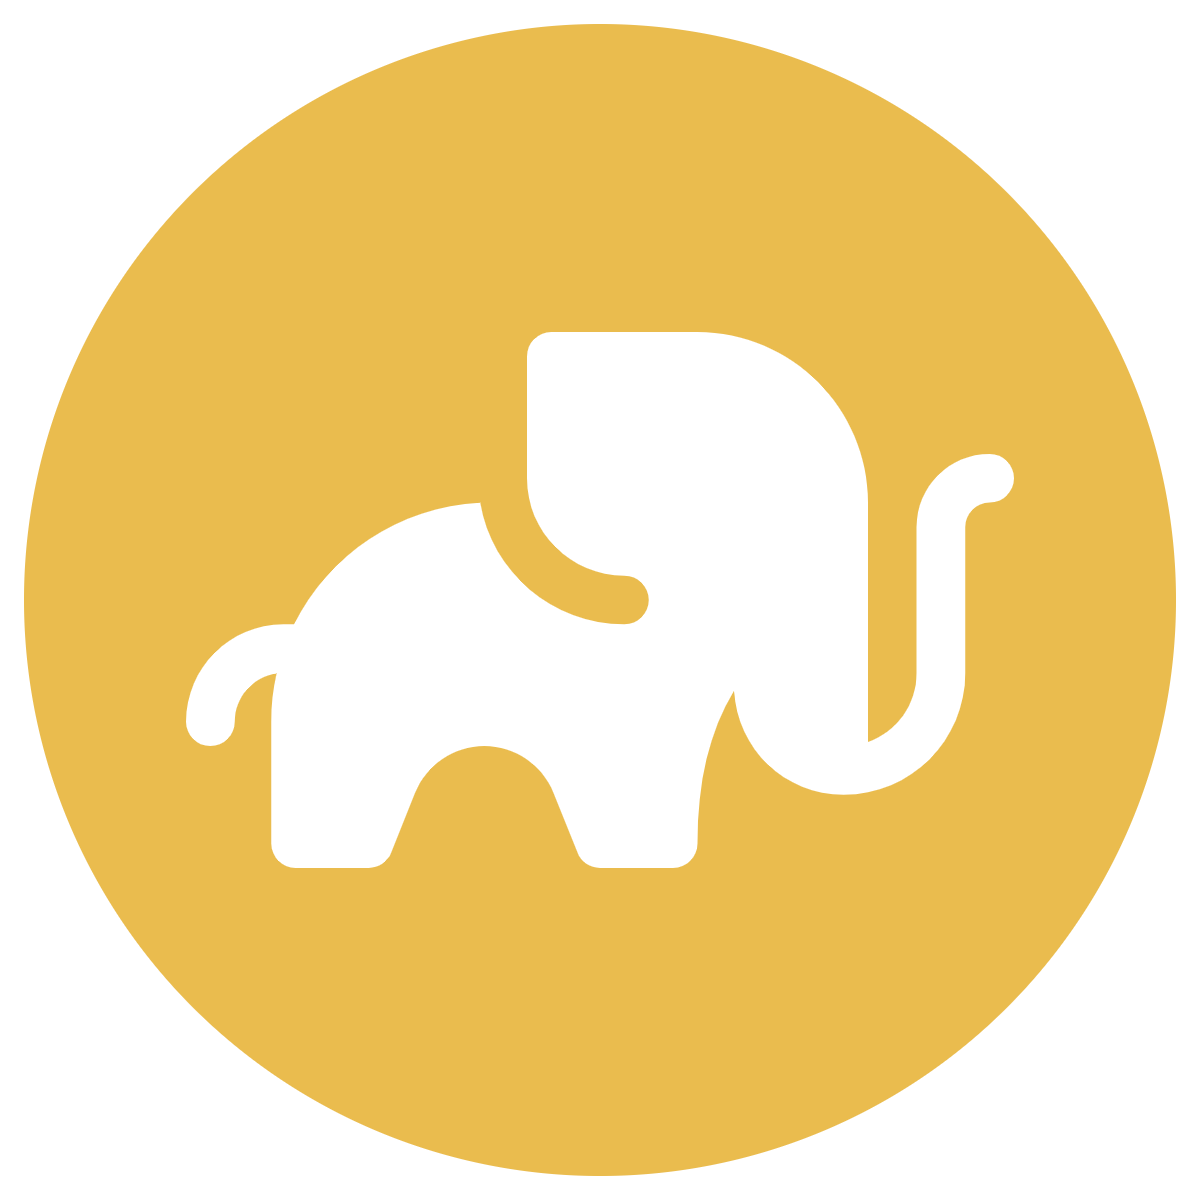 elephant.png